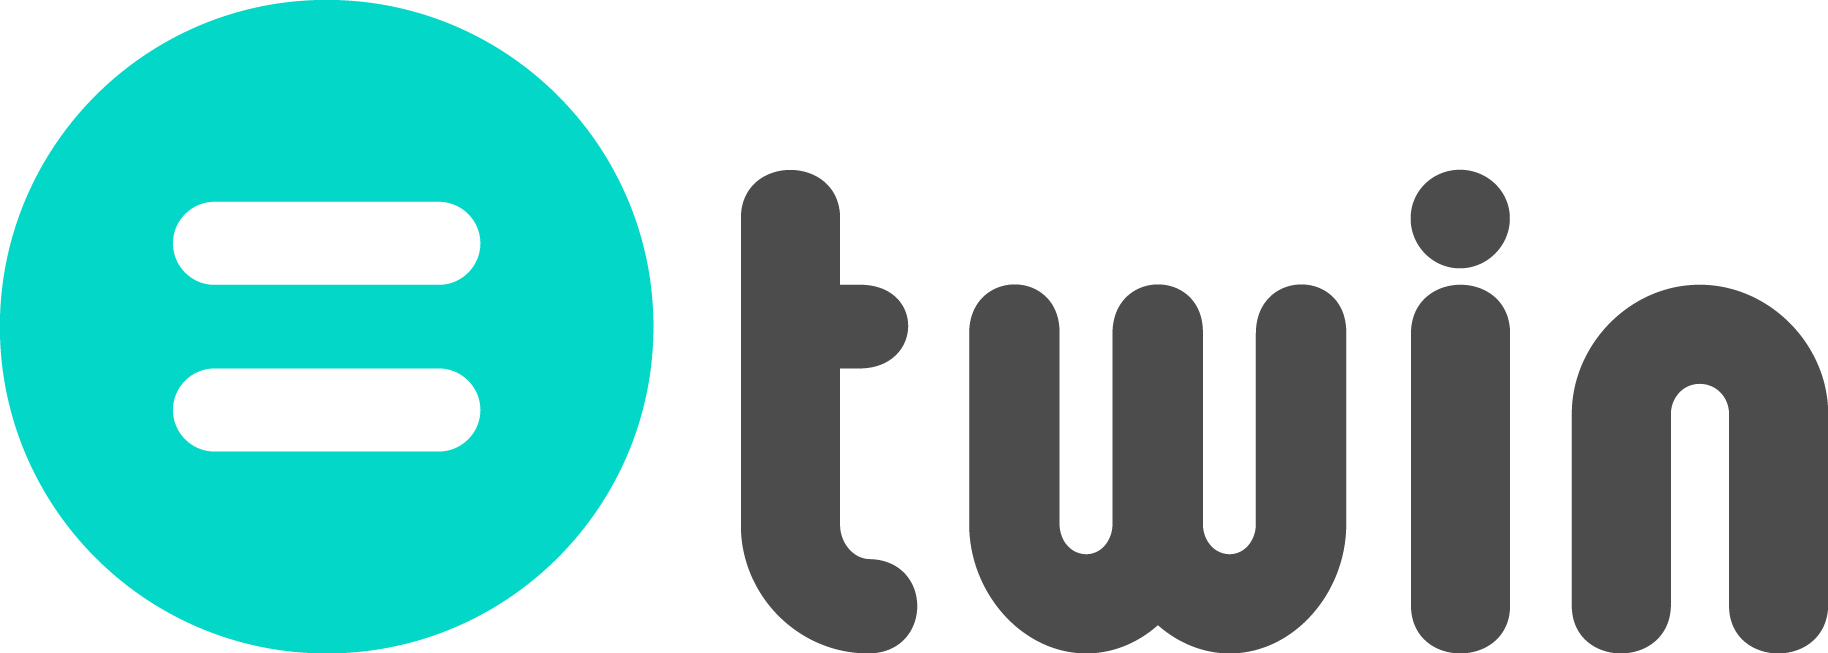 Tein Logo - Twin logo.png